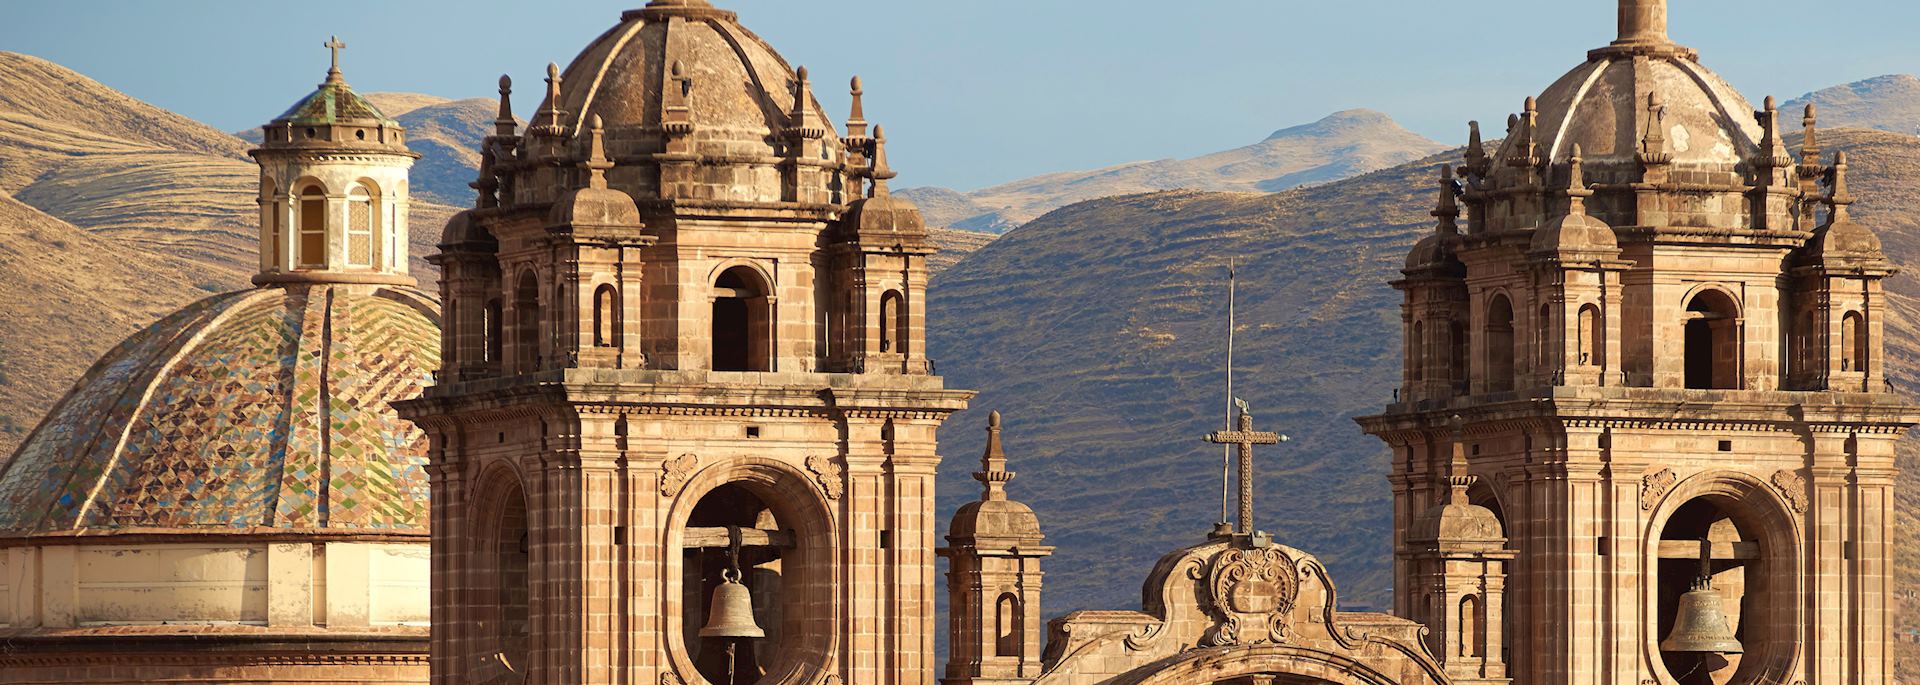 Jesuit church, Cuzco